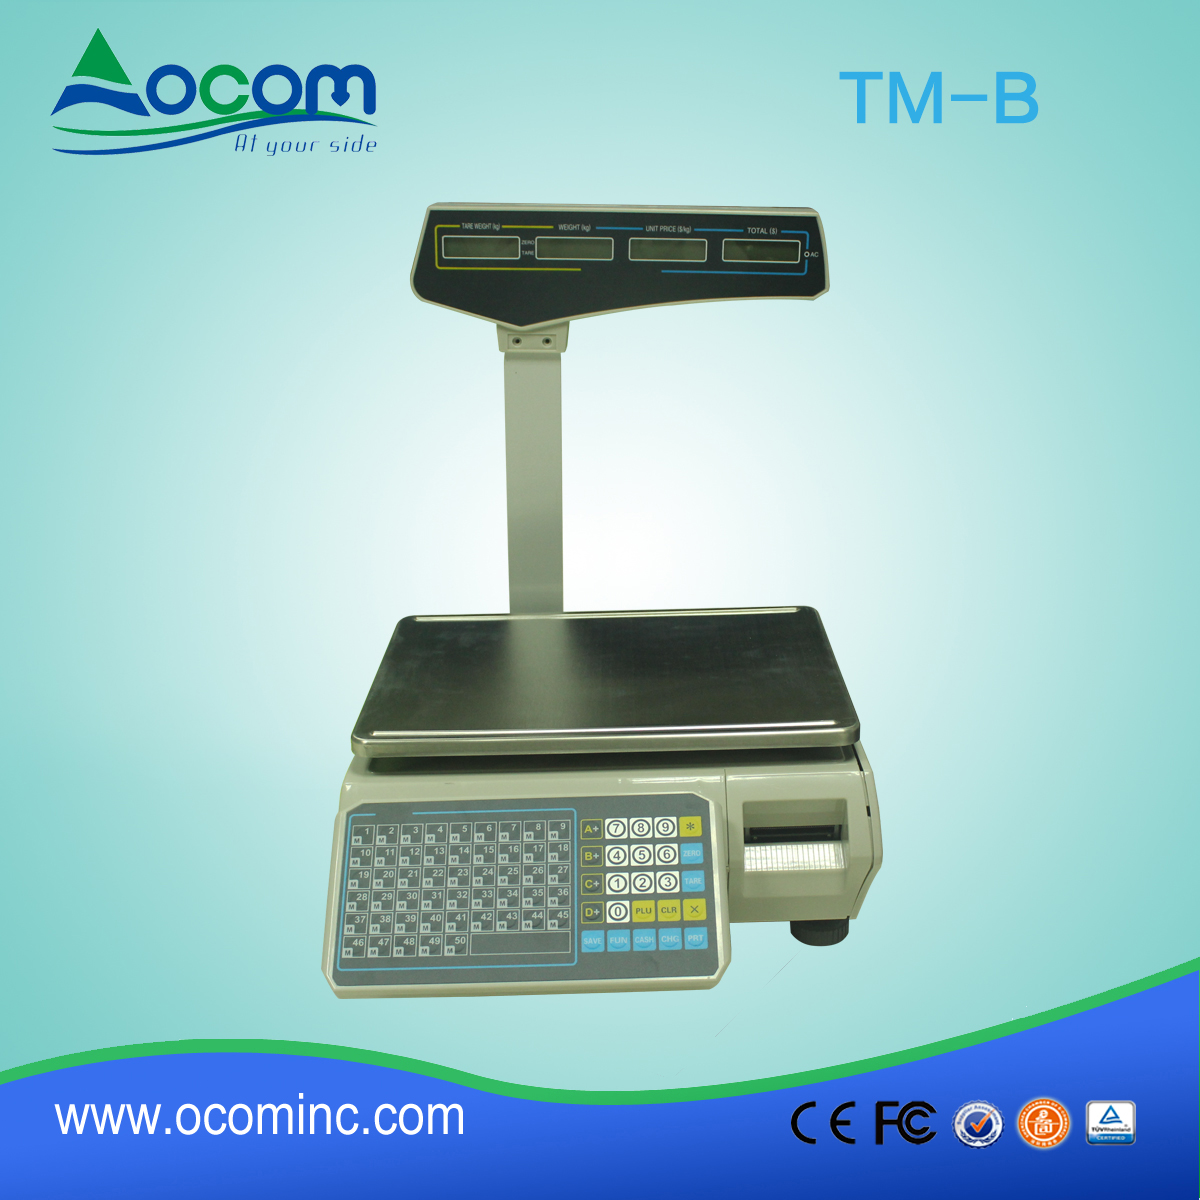 (tm-b) المصنع الصيني منخفض التكلفة 30 كغم مقياس الوزن الكتروني